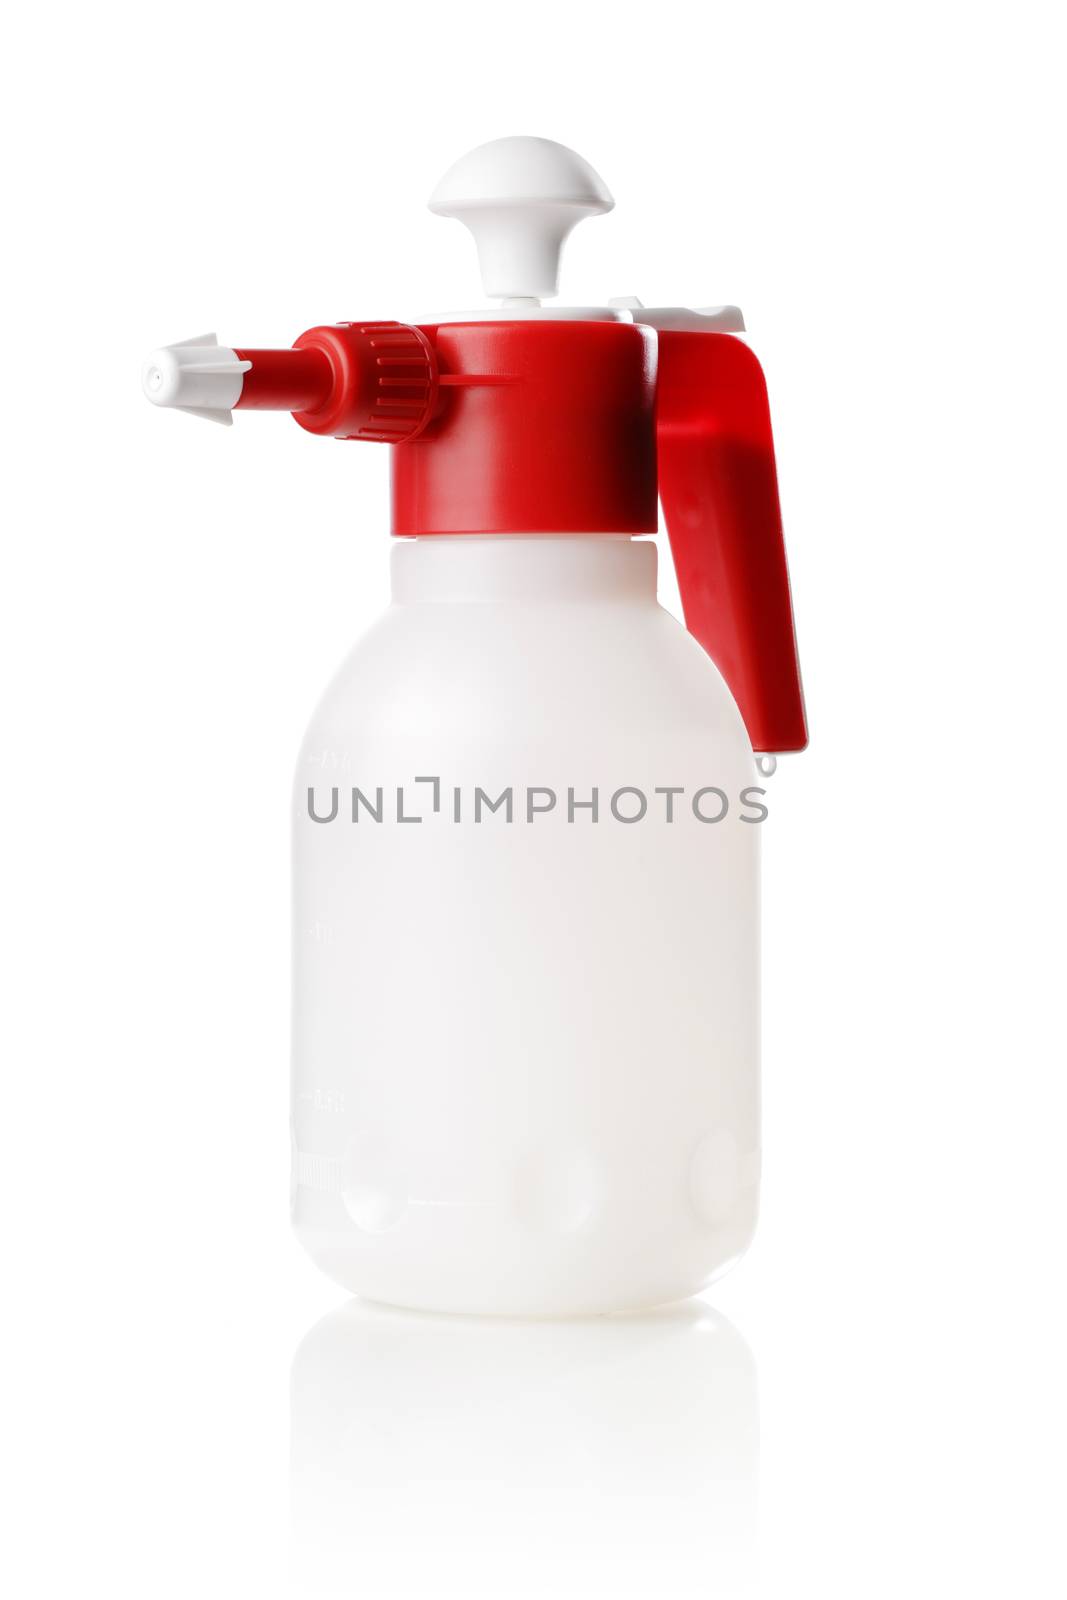 Spray Bottle by Stocksnapper